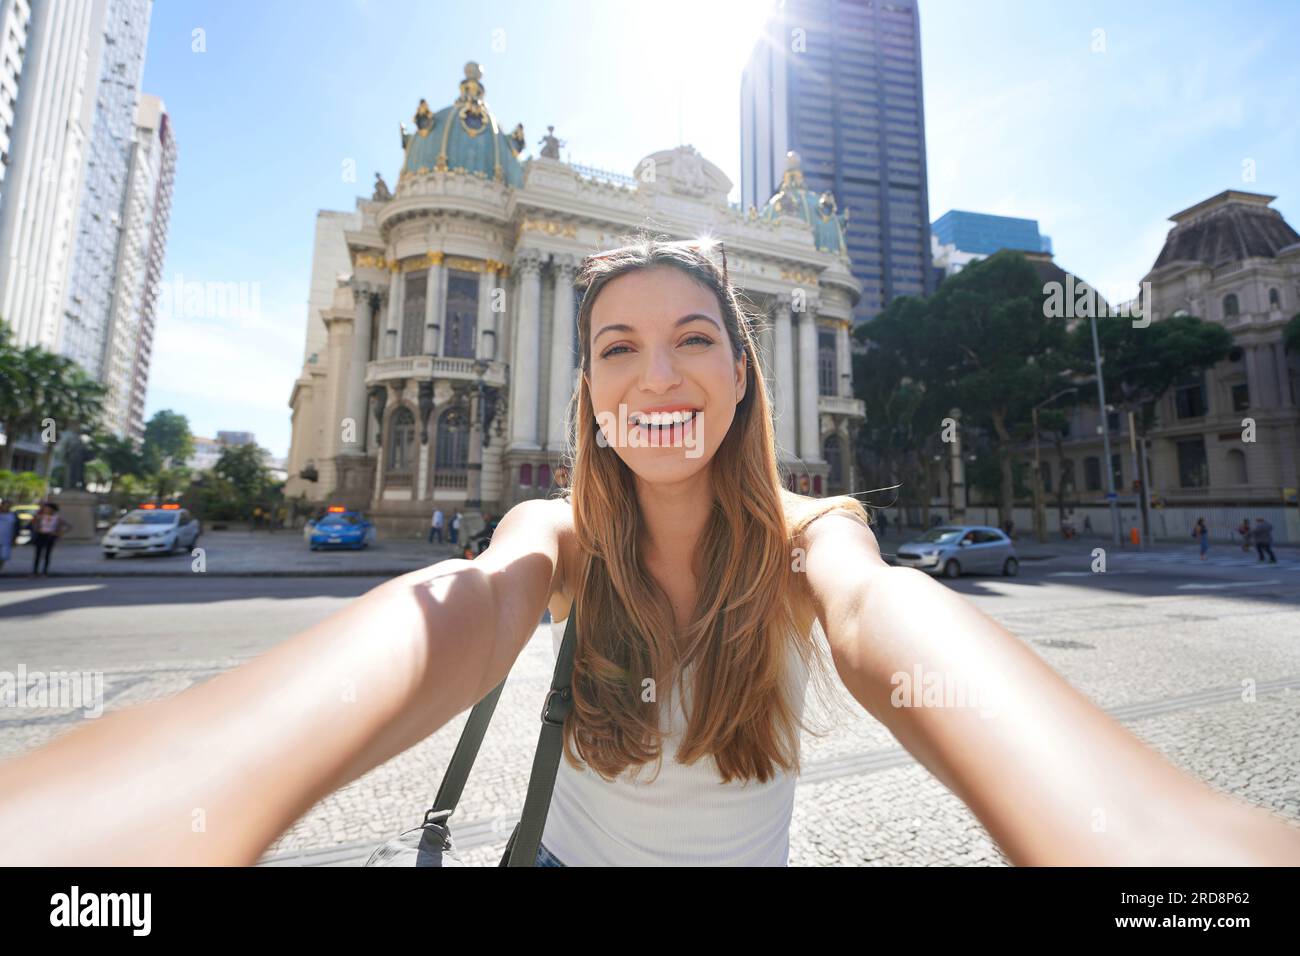 Brazilian young woman takes self portrait in front of the Municipal Theater of Rio de Janeiro, Brazil Stock Photo